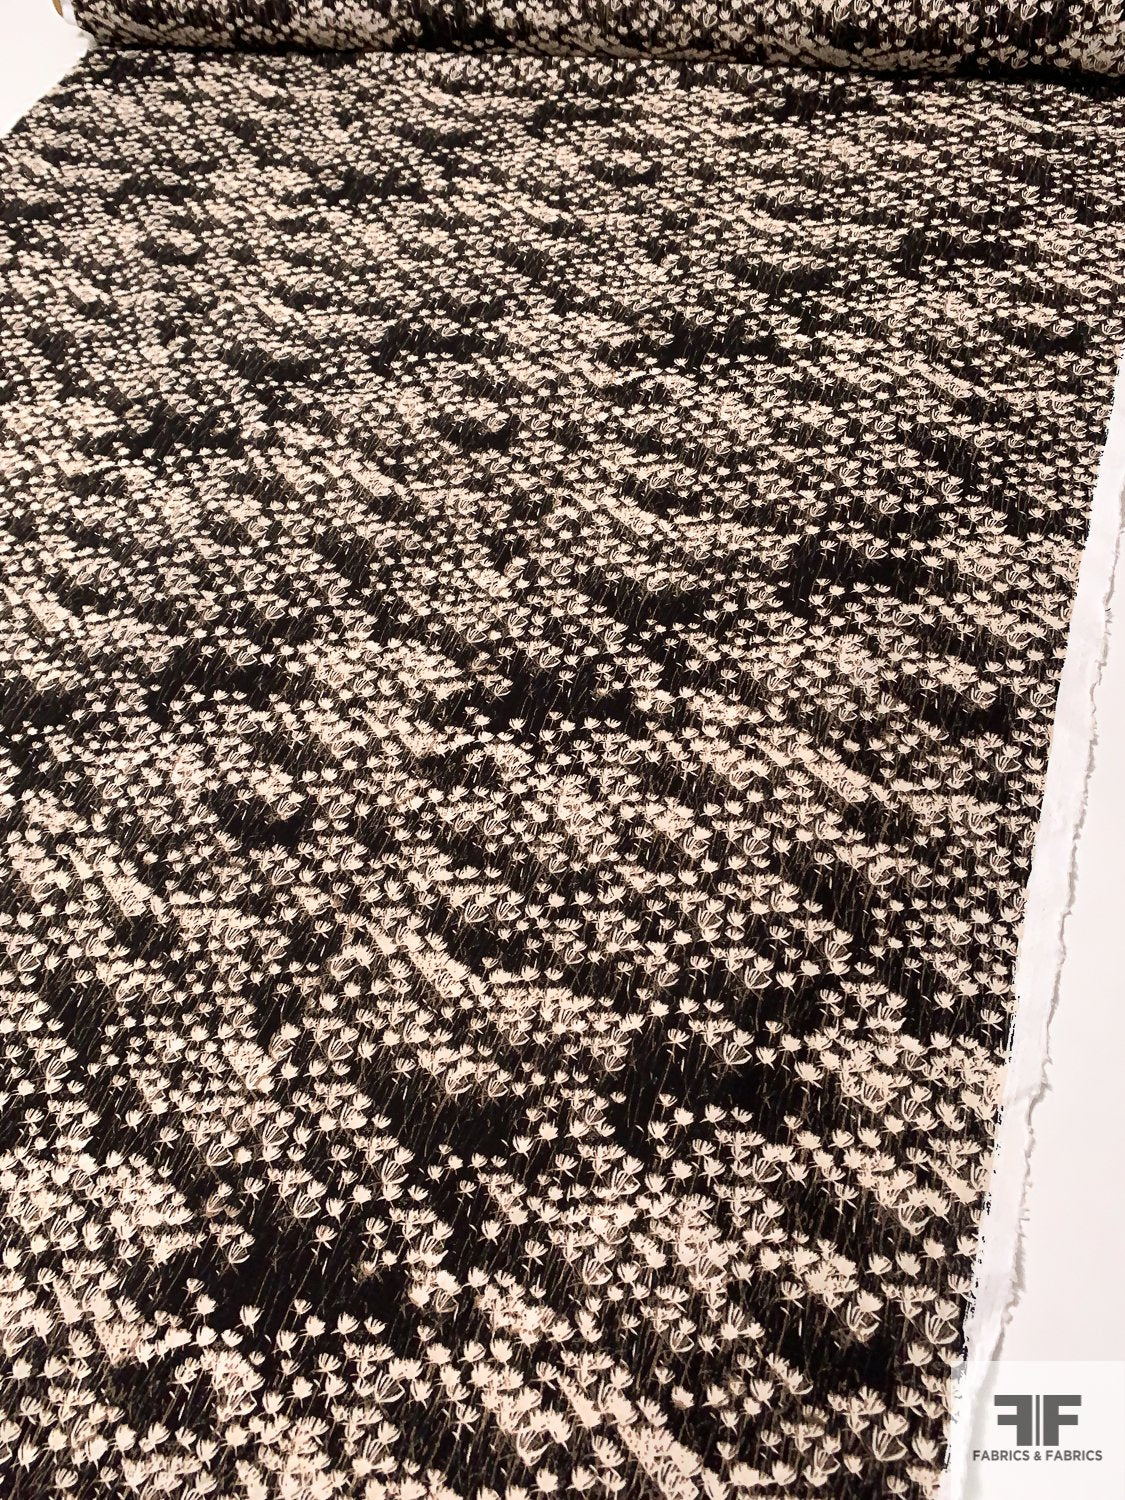 Wild Weeds Printed Cotton Poplin - Black / Ivory / Tan